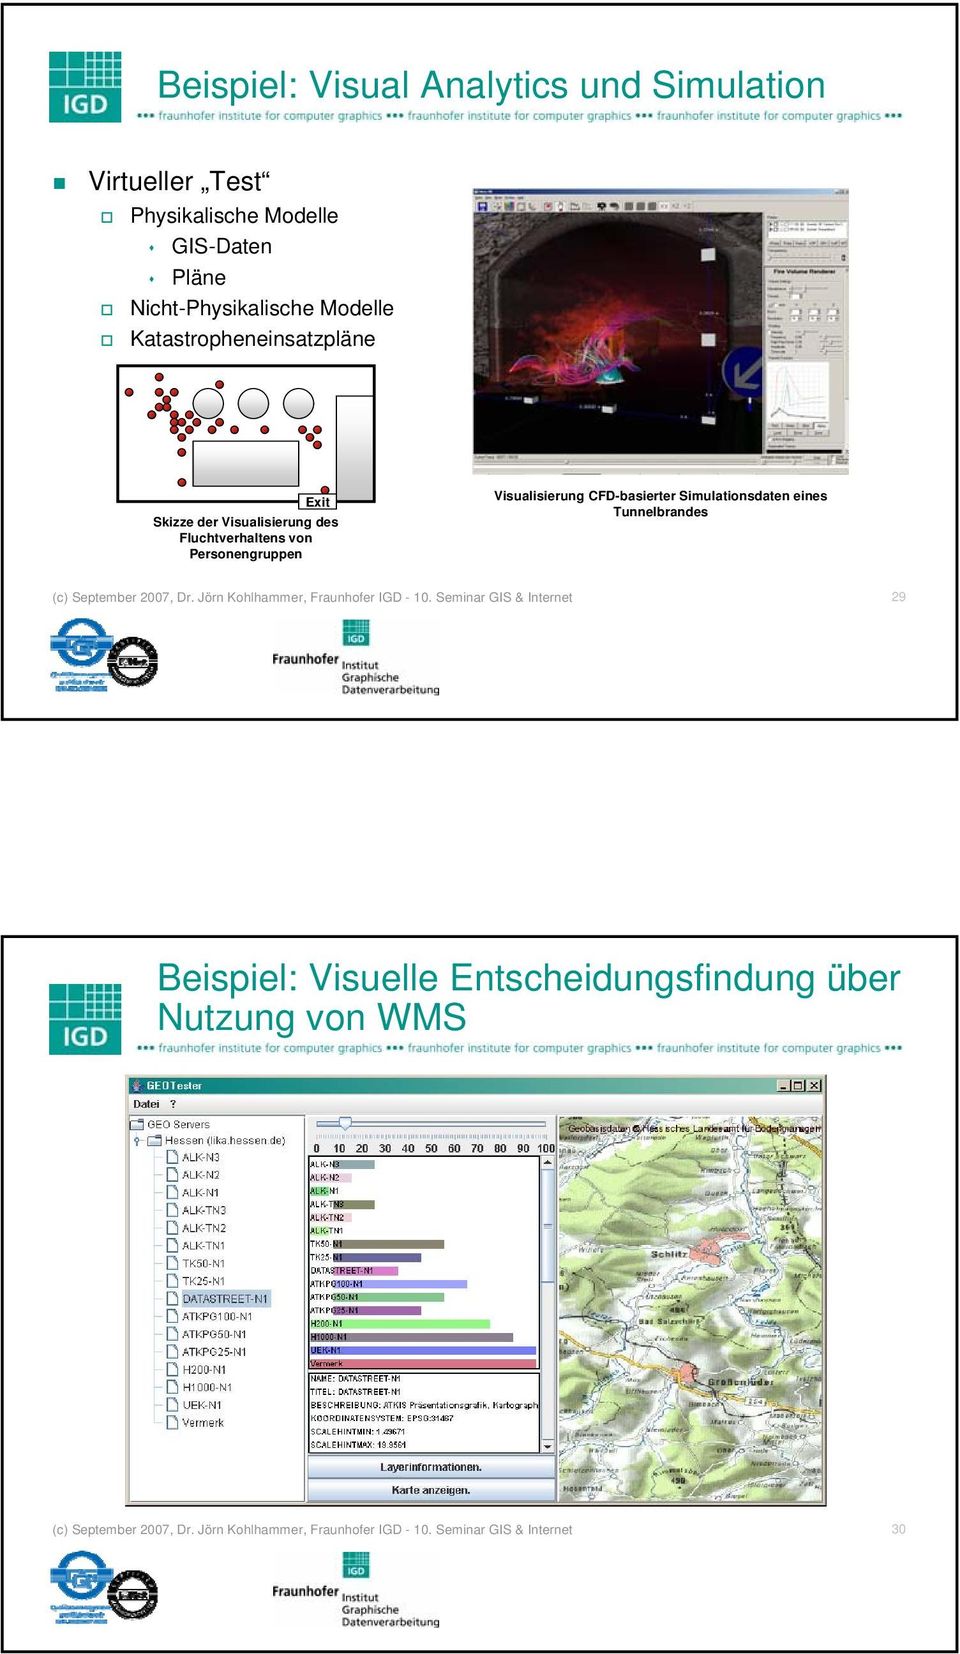 Simulationsdaten eines Tunnelbrandes (c) September 2007, Dr. Jörn Kohlhammer, Fraunhofer IGD - 10.